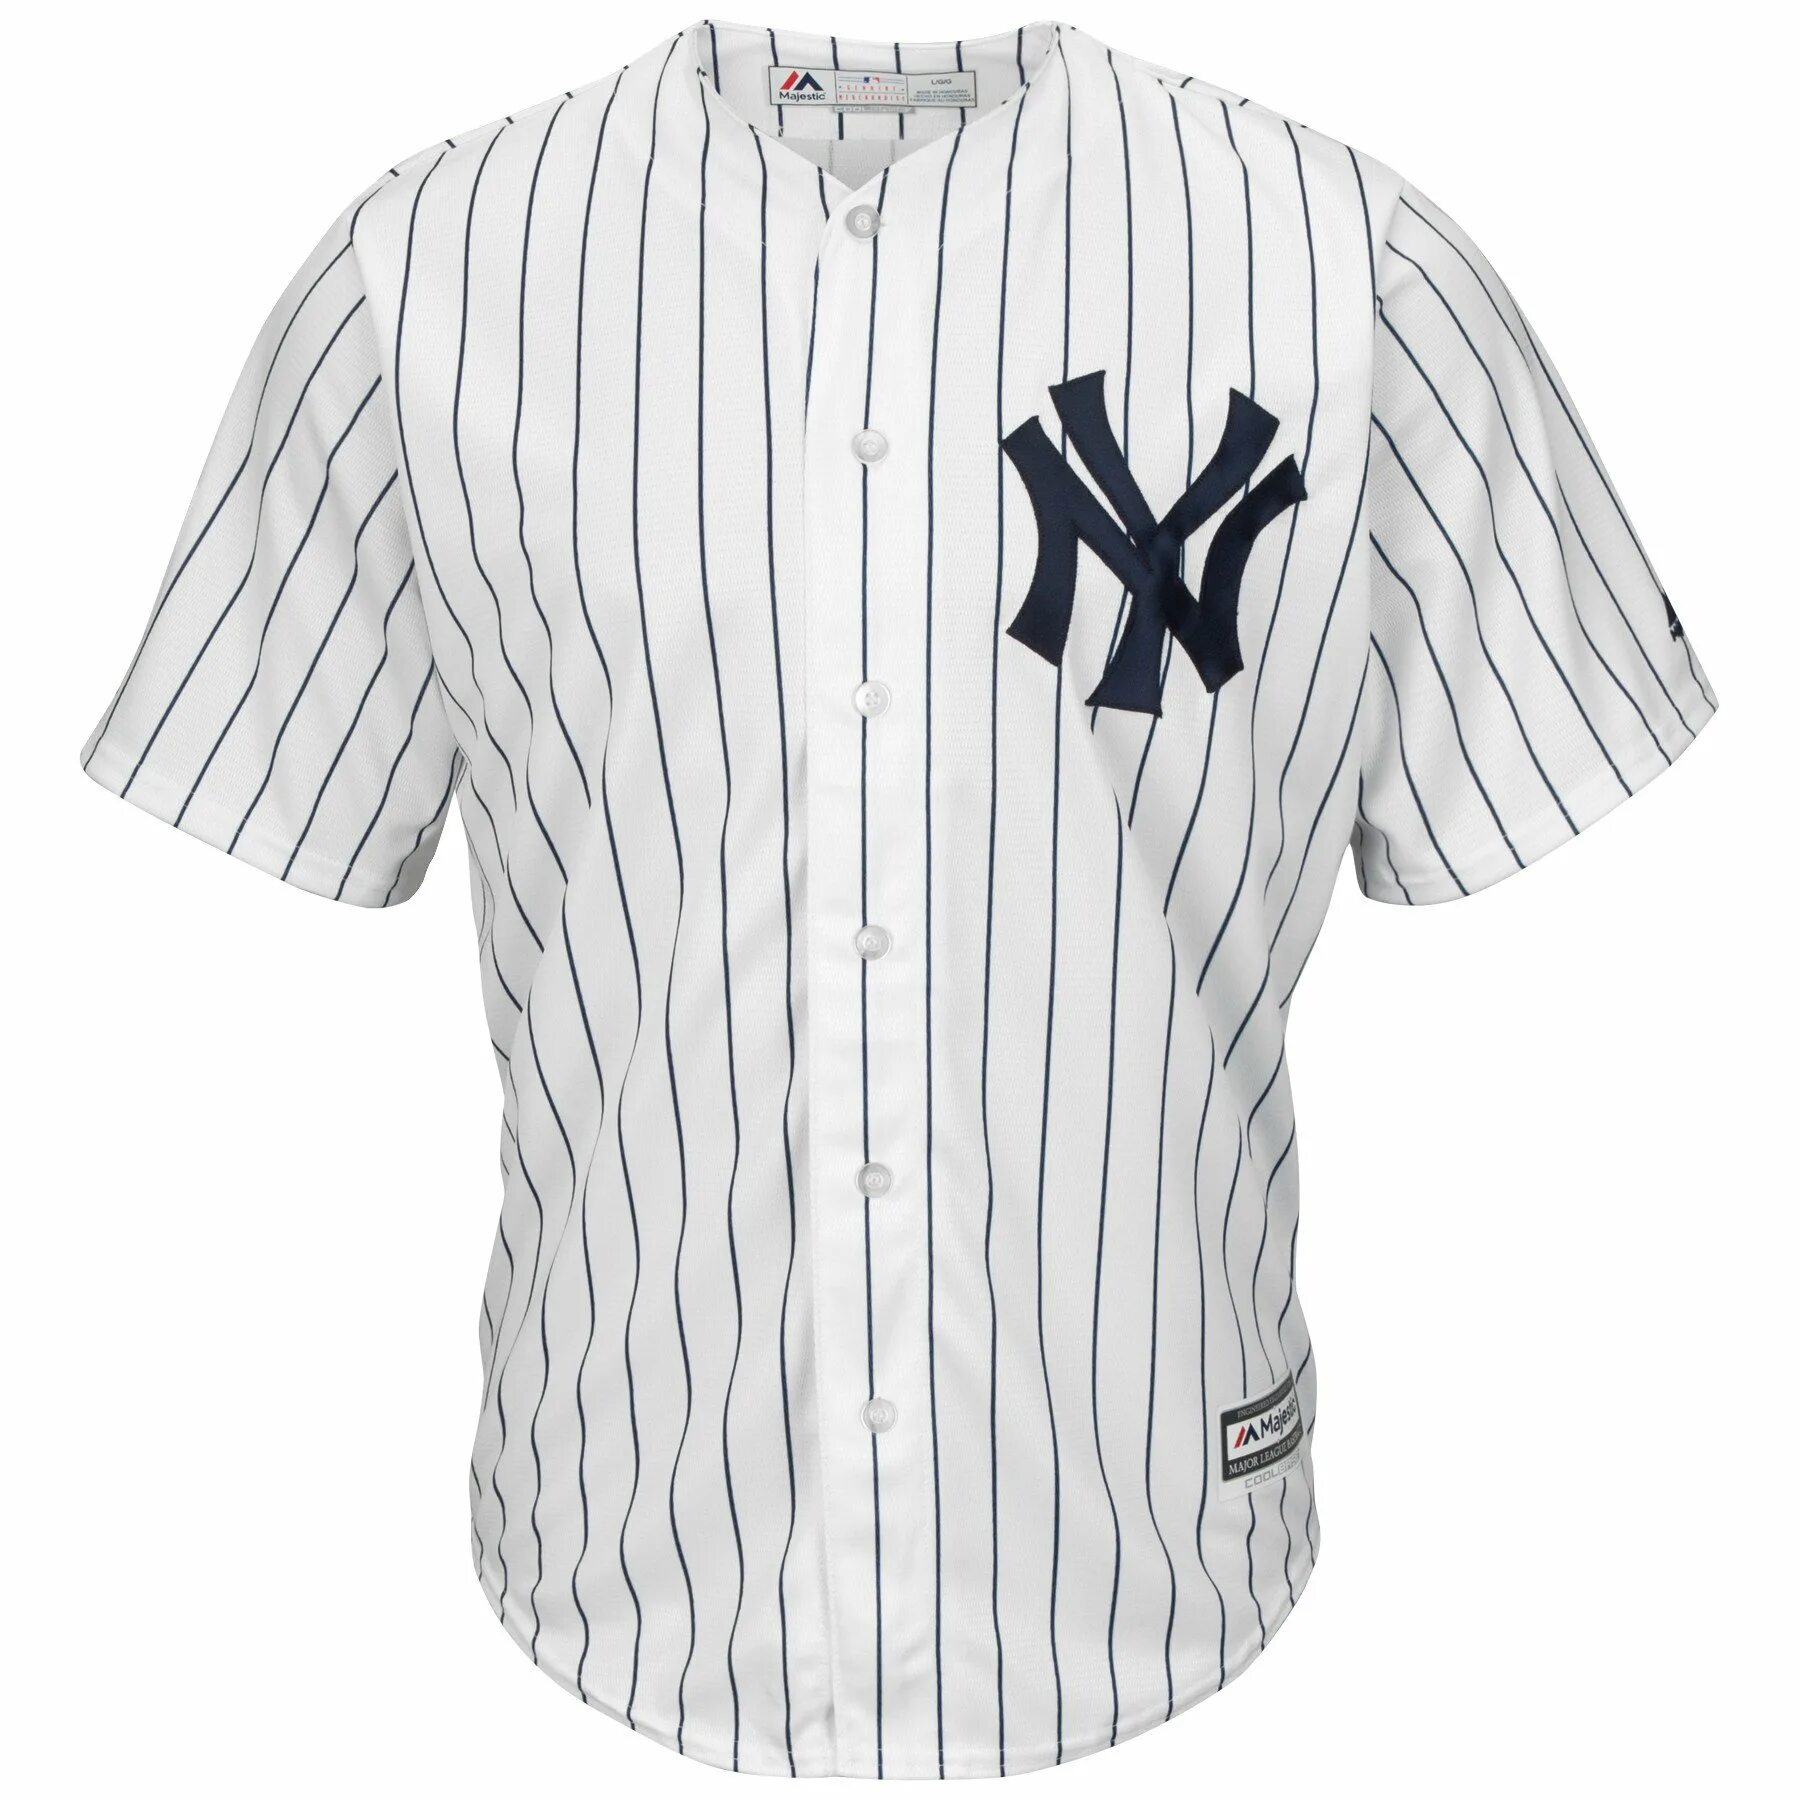 Бейсбольная футболка. Джерси New York Yankees Винтаж. Джерси MLB Yankee. Рубашка New York Yankees. Бейсбольная рубашка New York Yankees, Nike MLB.